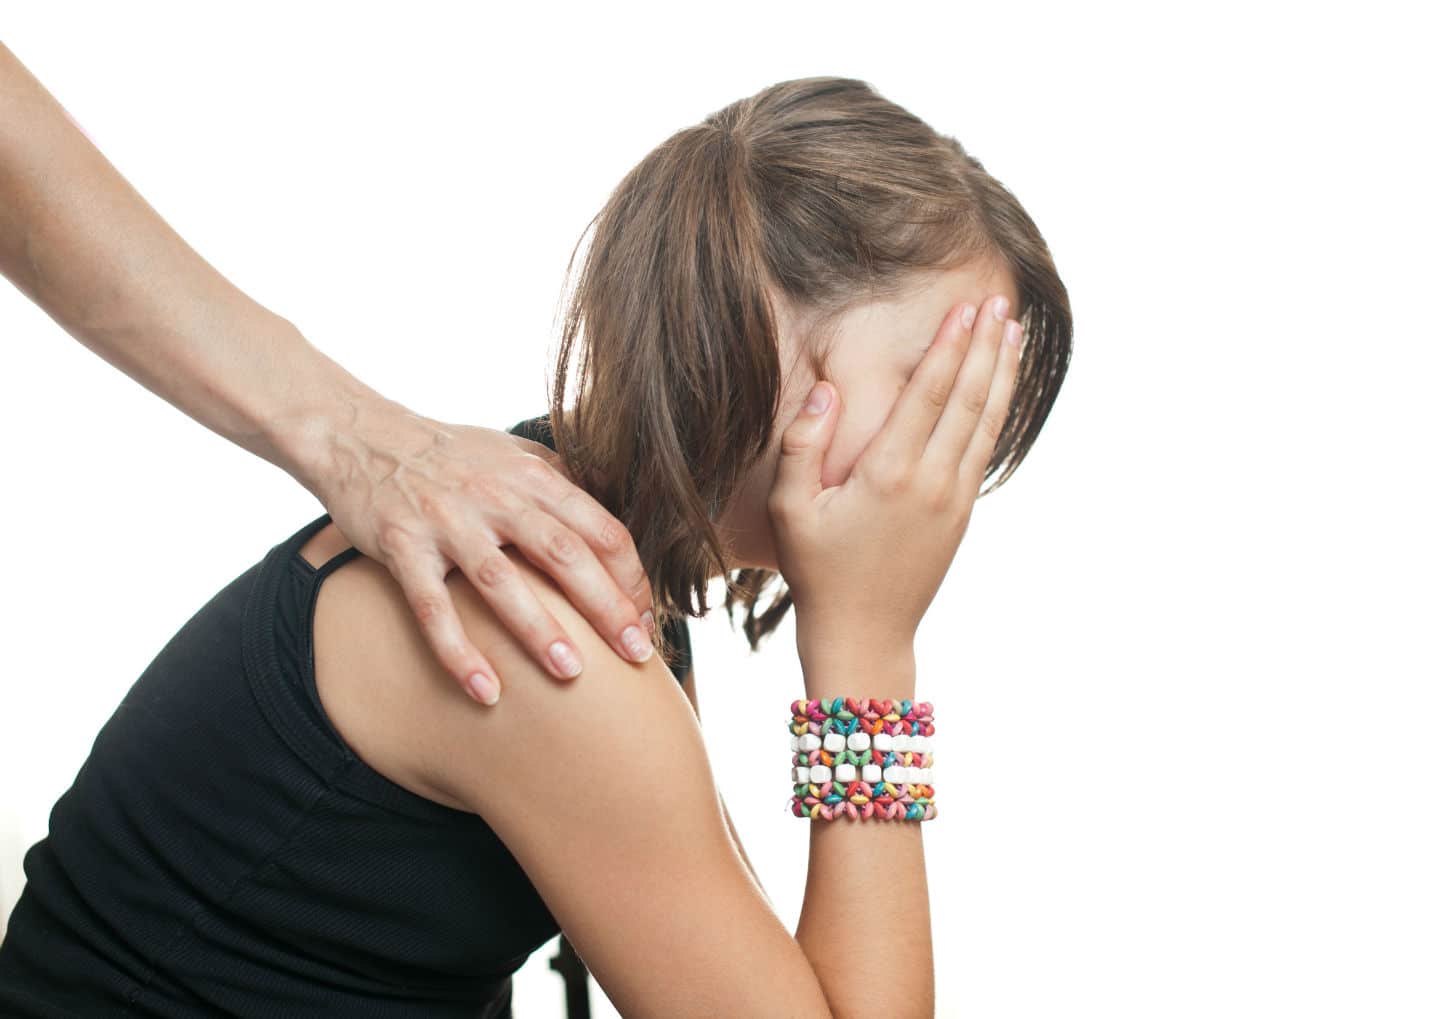 Teenage Hair Loss - Causes, Symptoms & Treatment Options